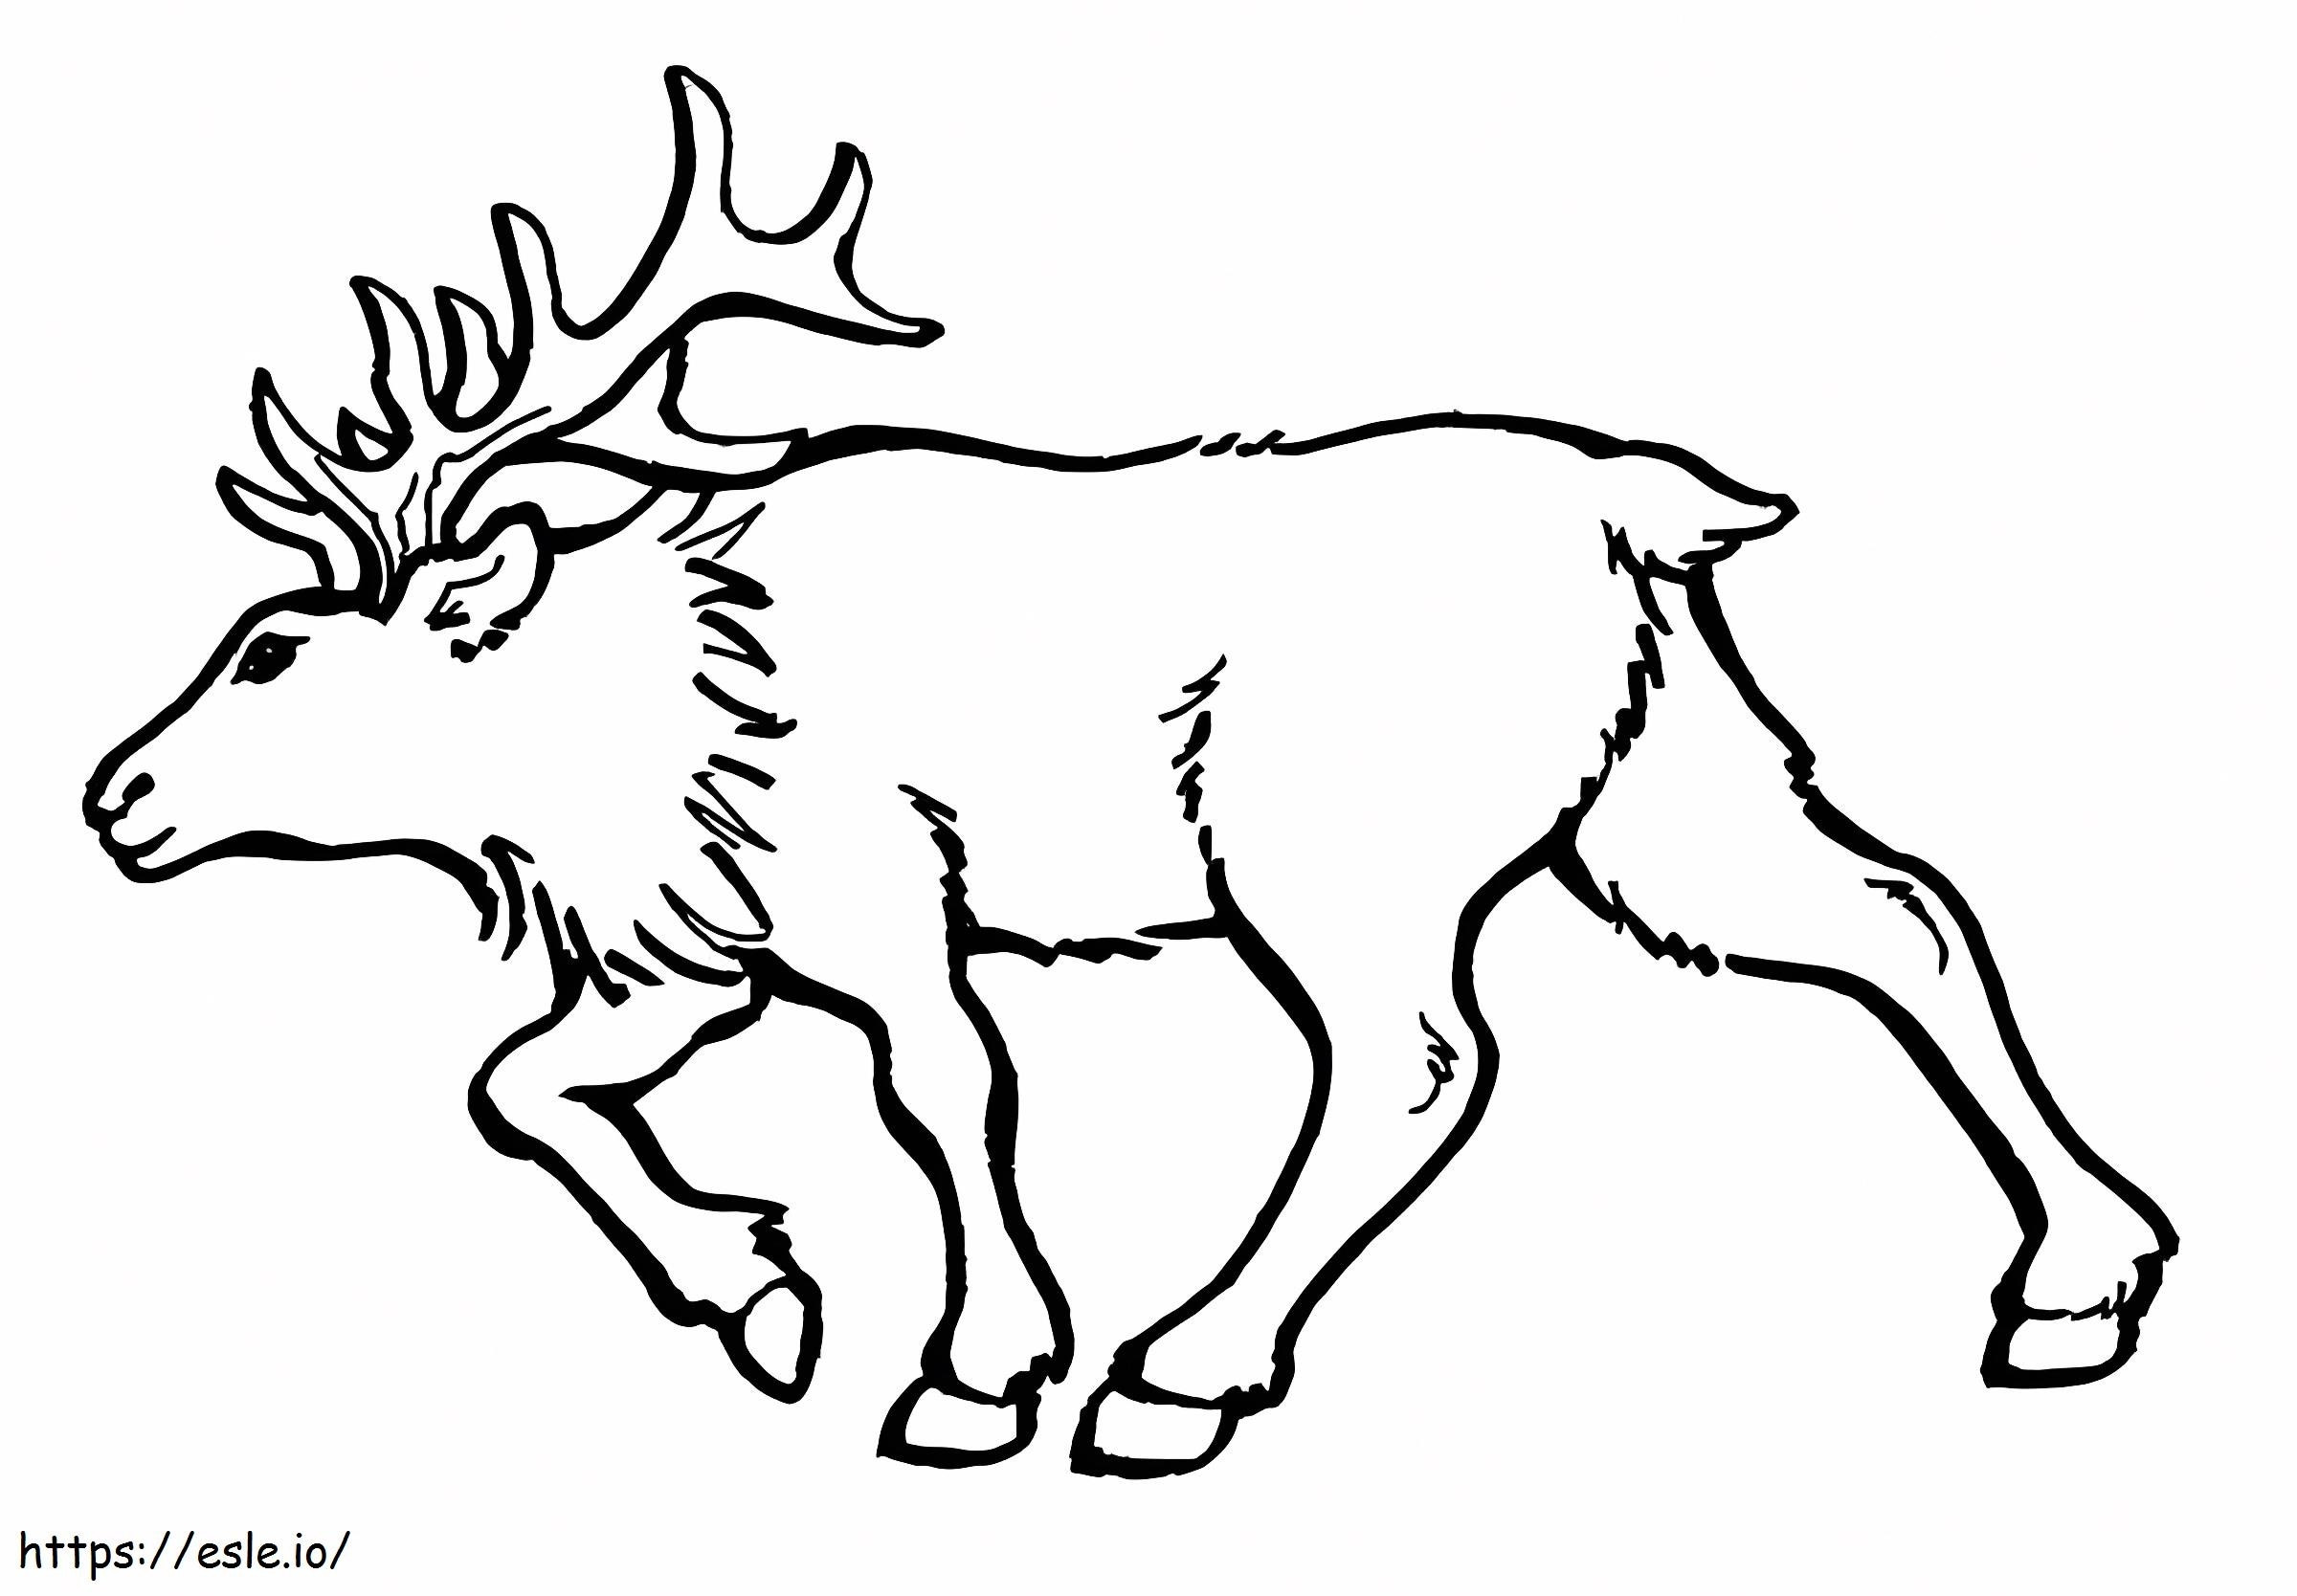 Bull Elk coloring page